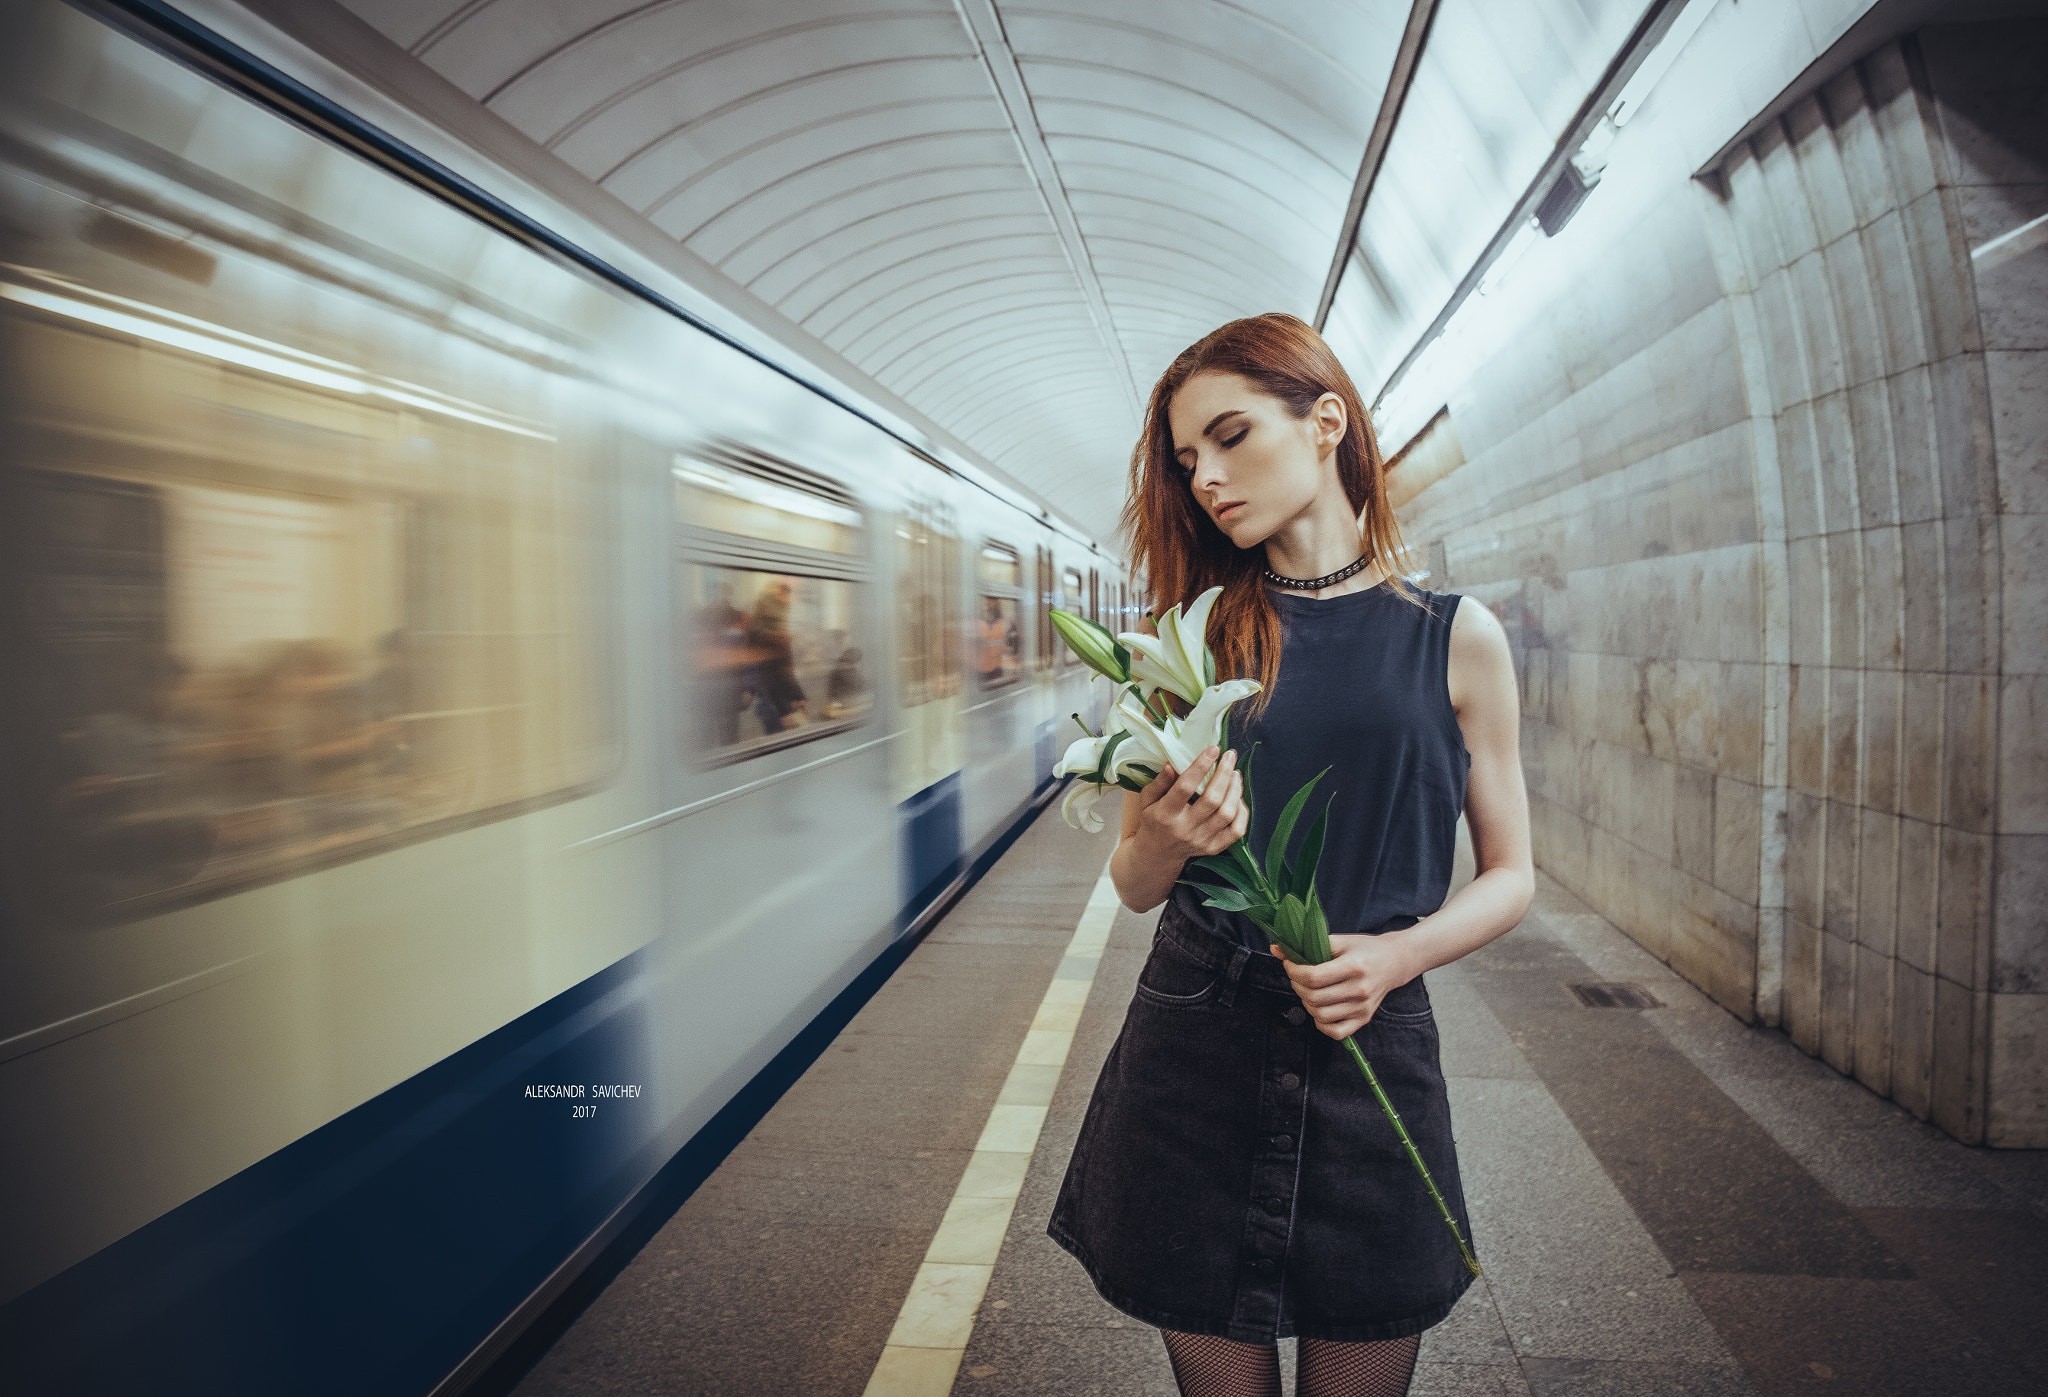 People 2048x1397 Aleksandr Savichev train flowers subway vehicle women model 500px underground plants skirt makeup redhead 2017 (Year) text